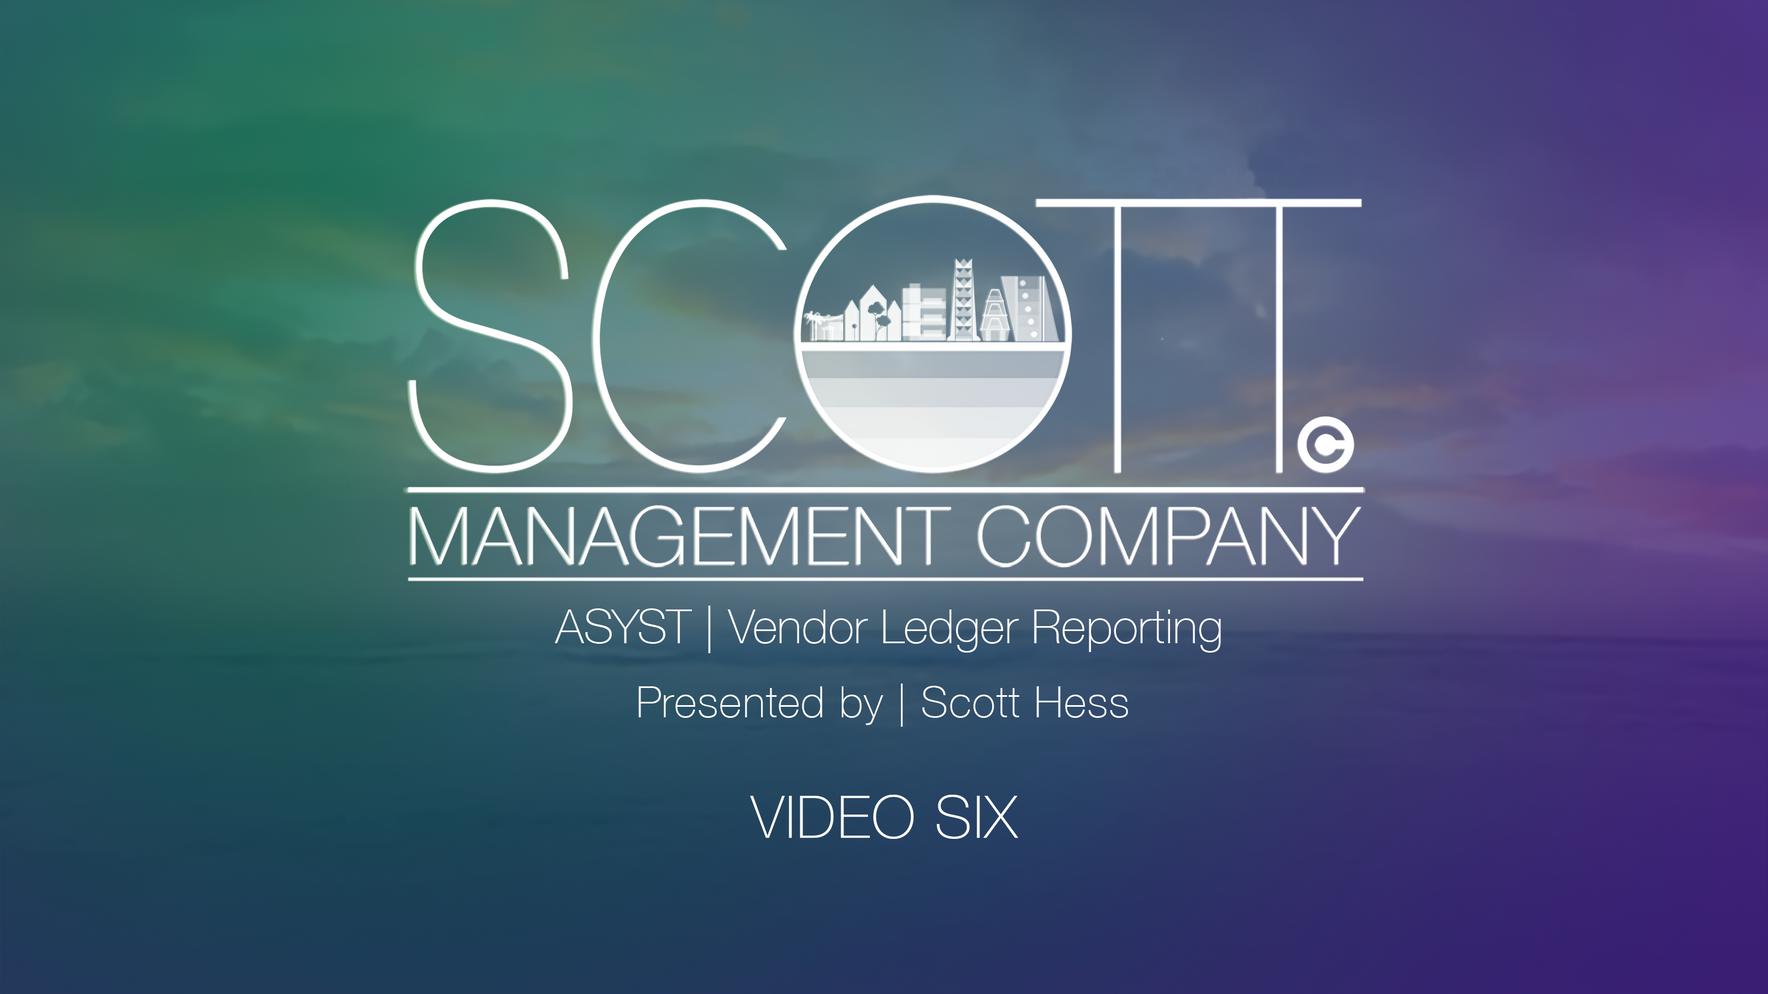 ASYST | Vendor Ledger Reporting